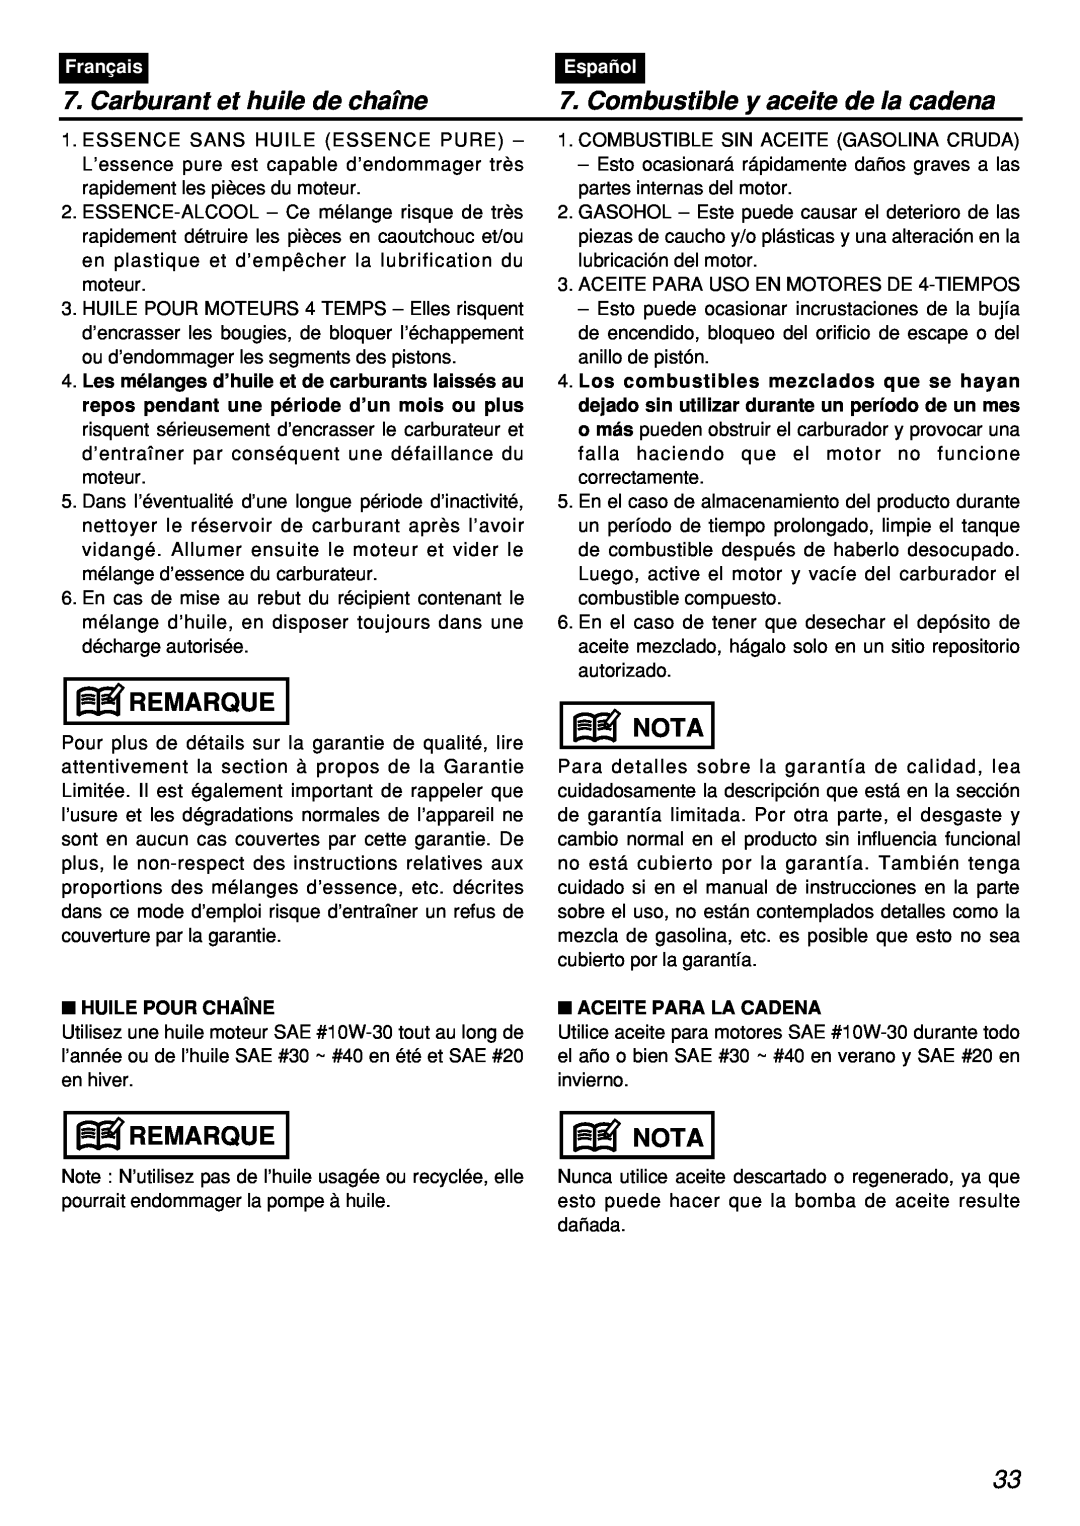 Zenoah PSZ2401, PSZ2401-CA manual Carburant et huile de chaîne, Combustible y aceite de la cadena, Remarque, Nota, Français 